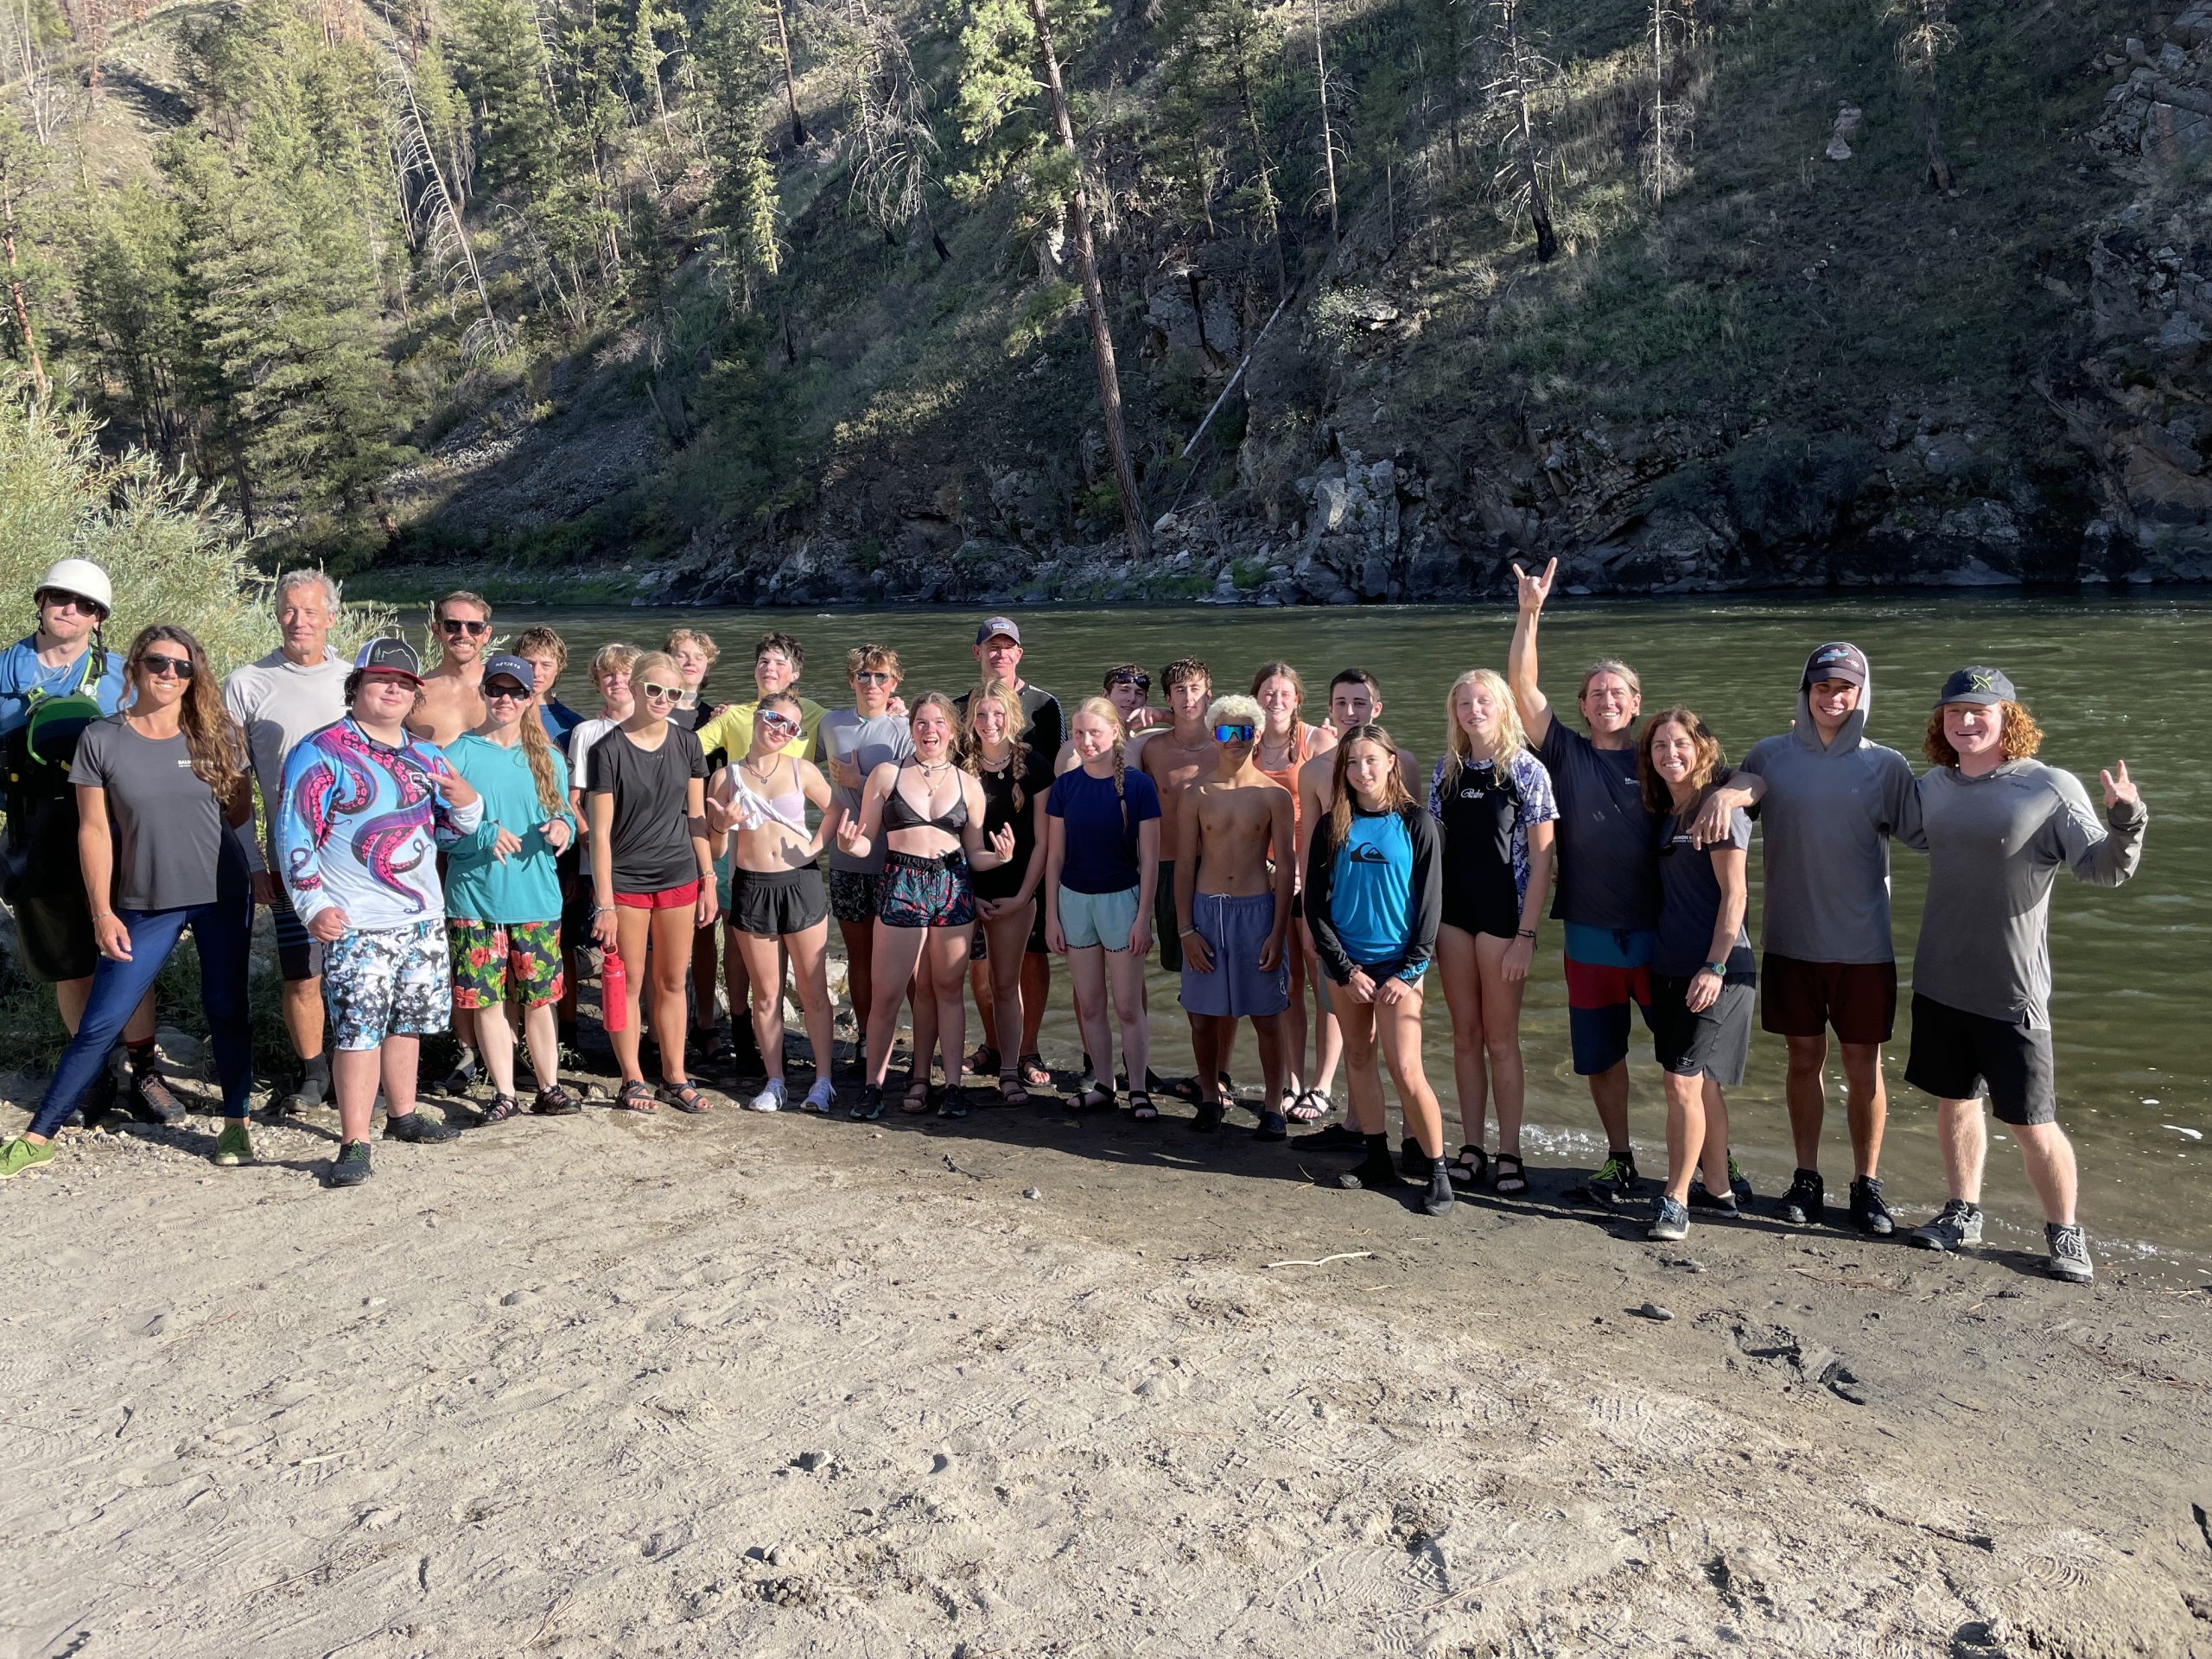 teen-kayak-camp-beginner-in-rapid